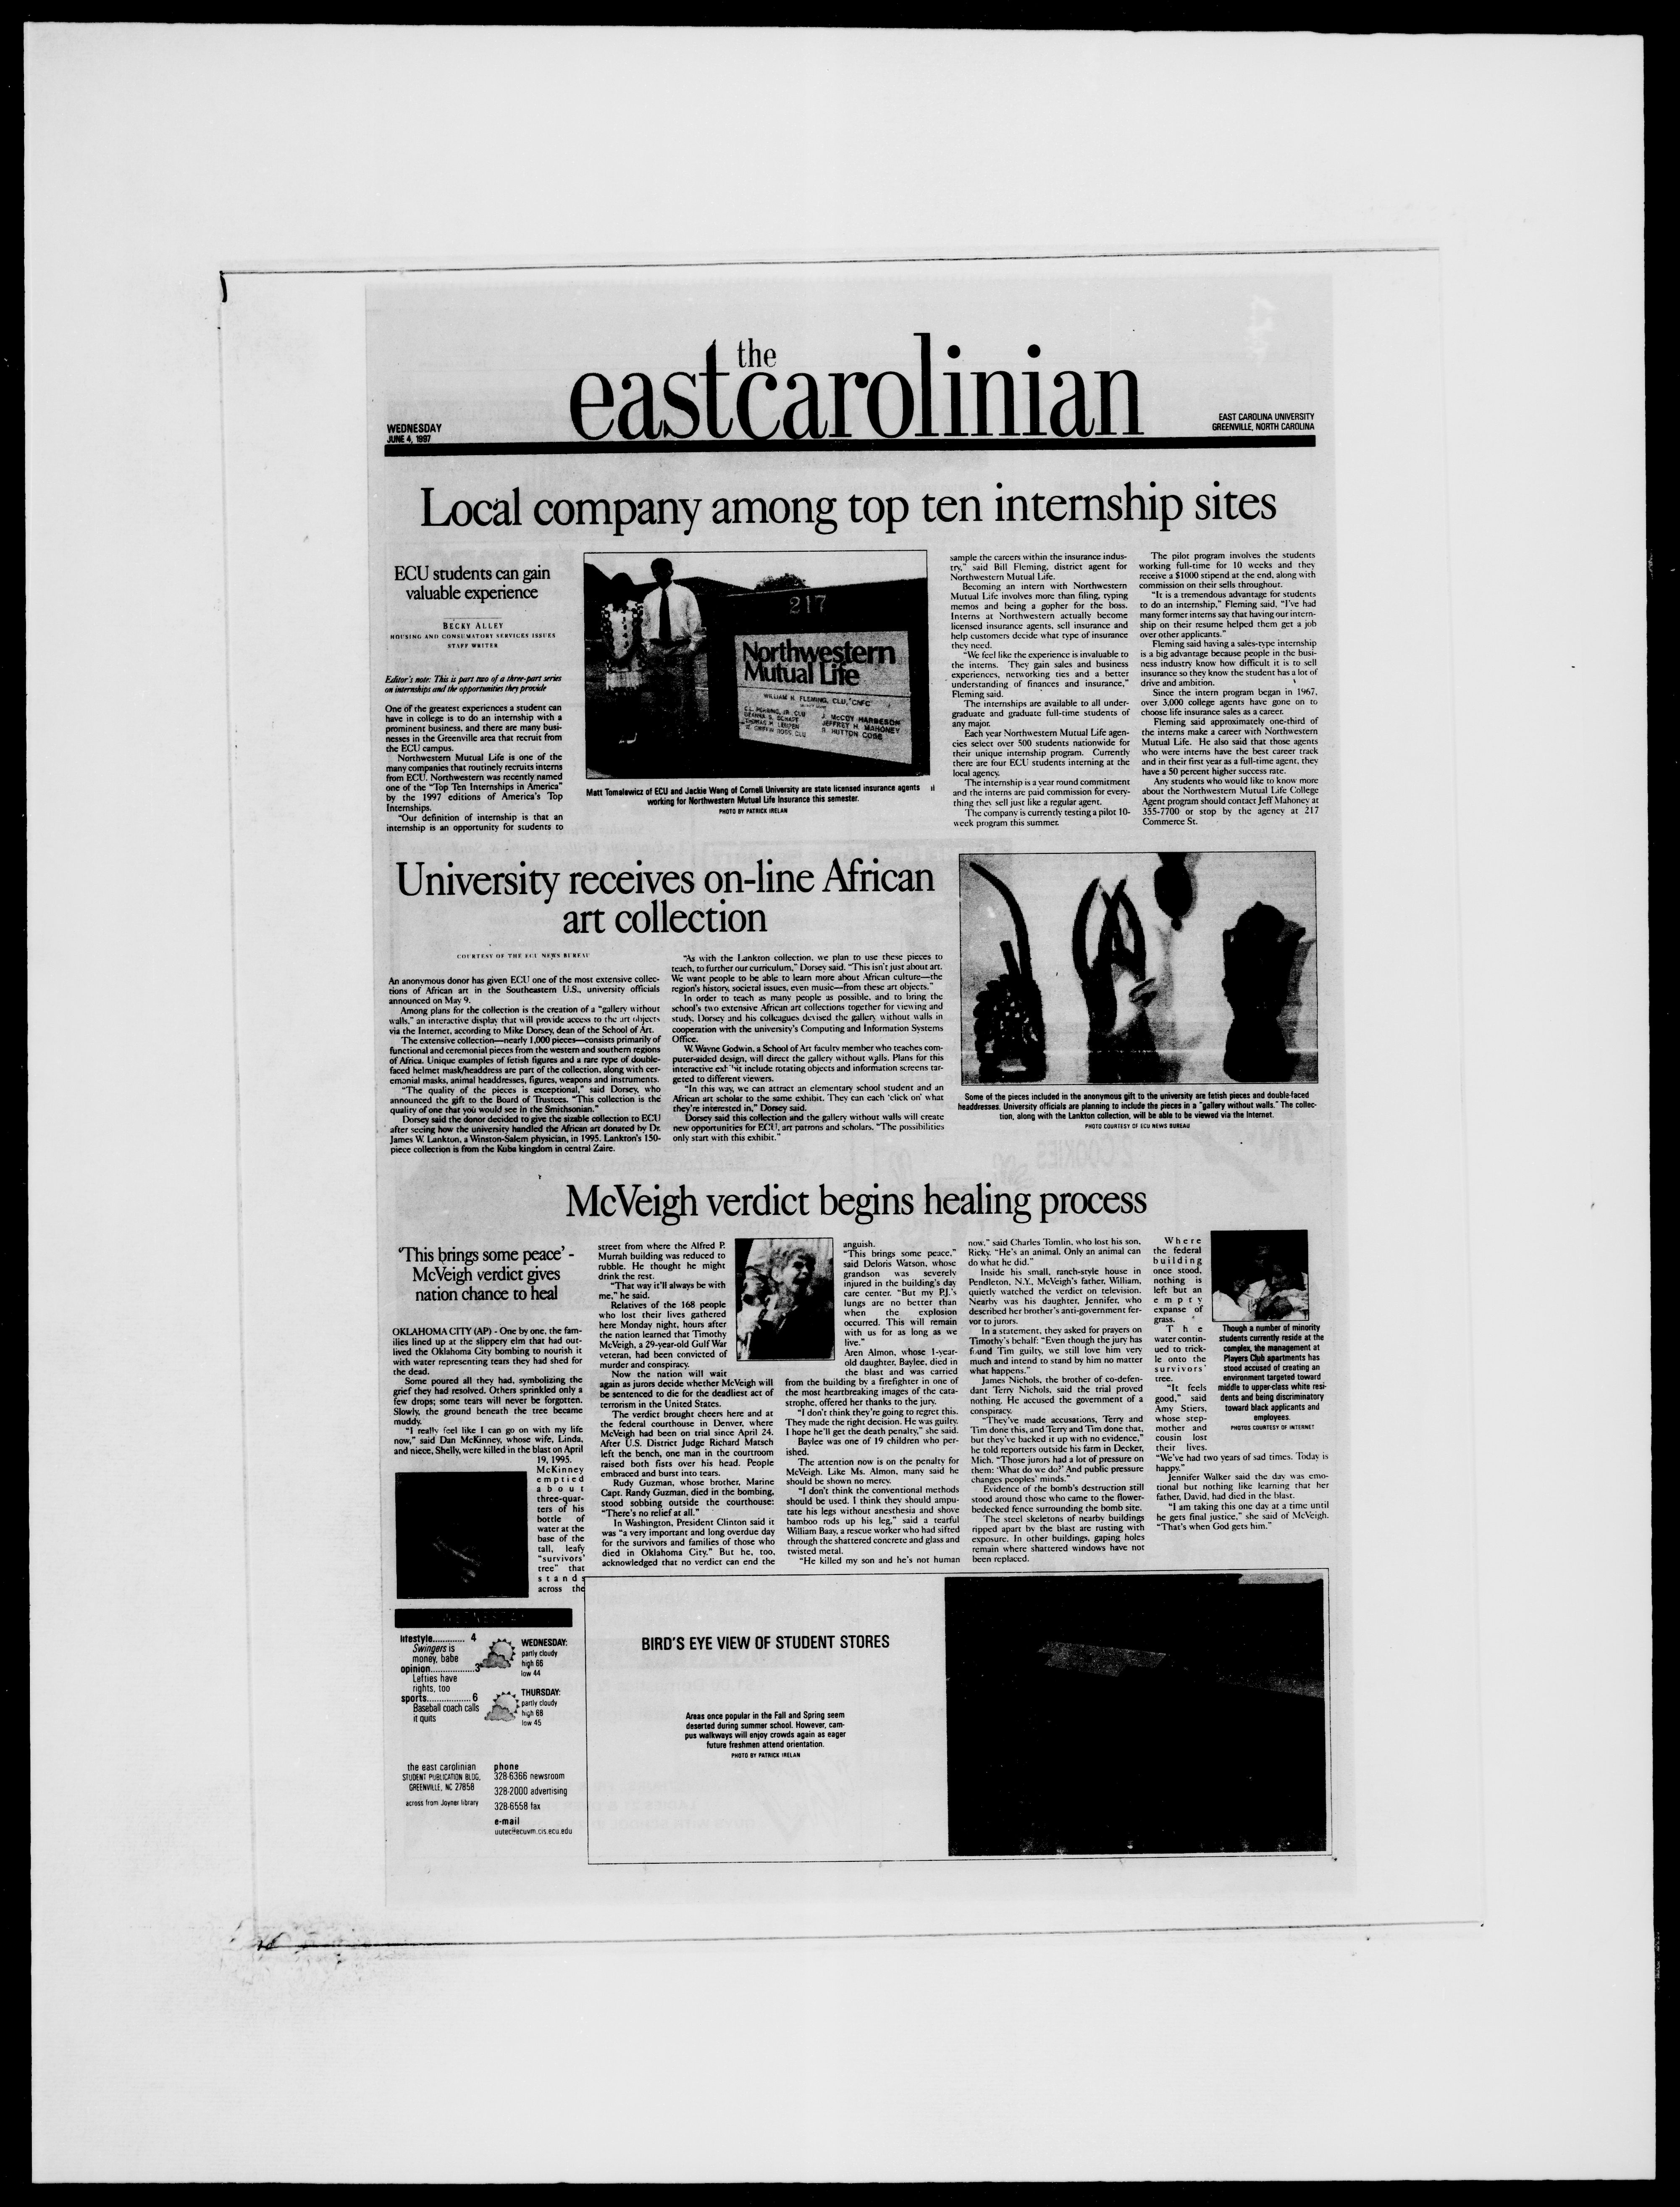 The East Carolinian, June 4, 1997 picture